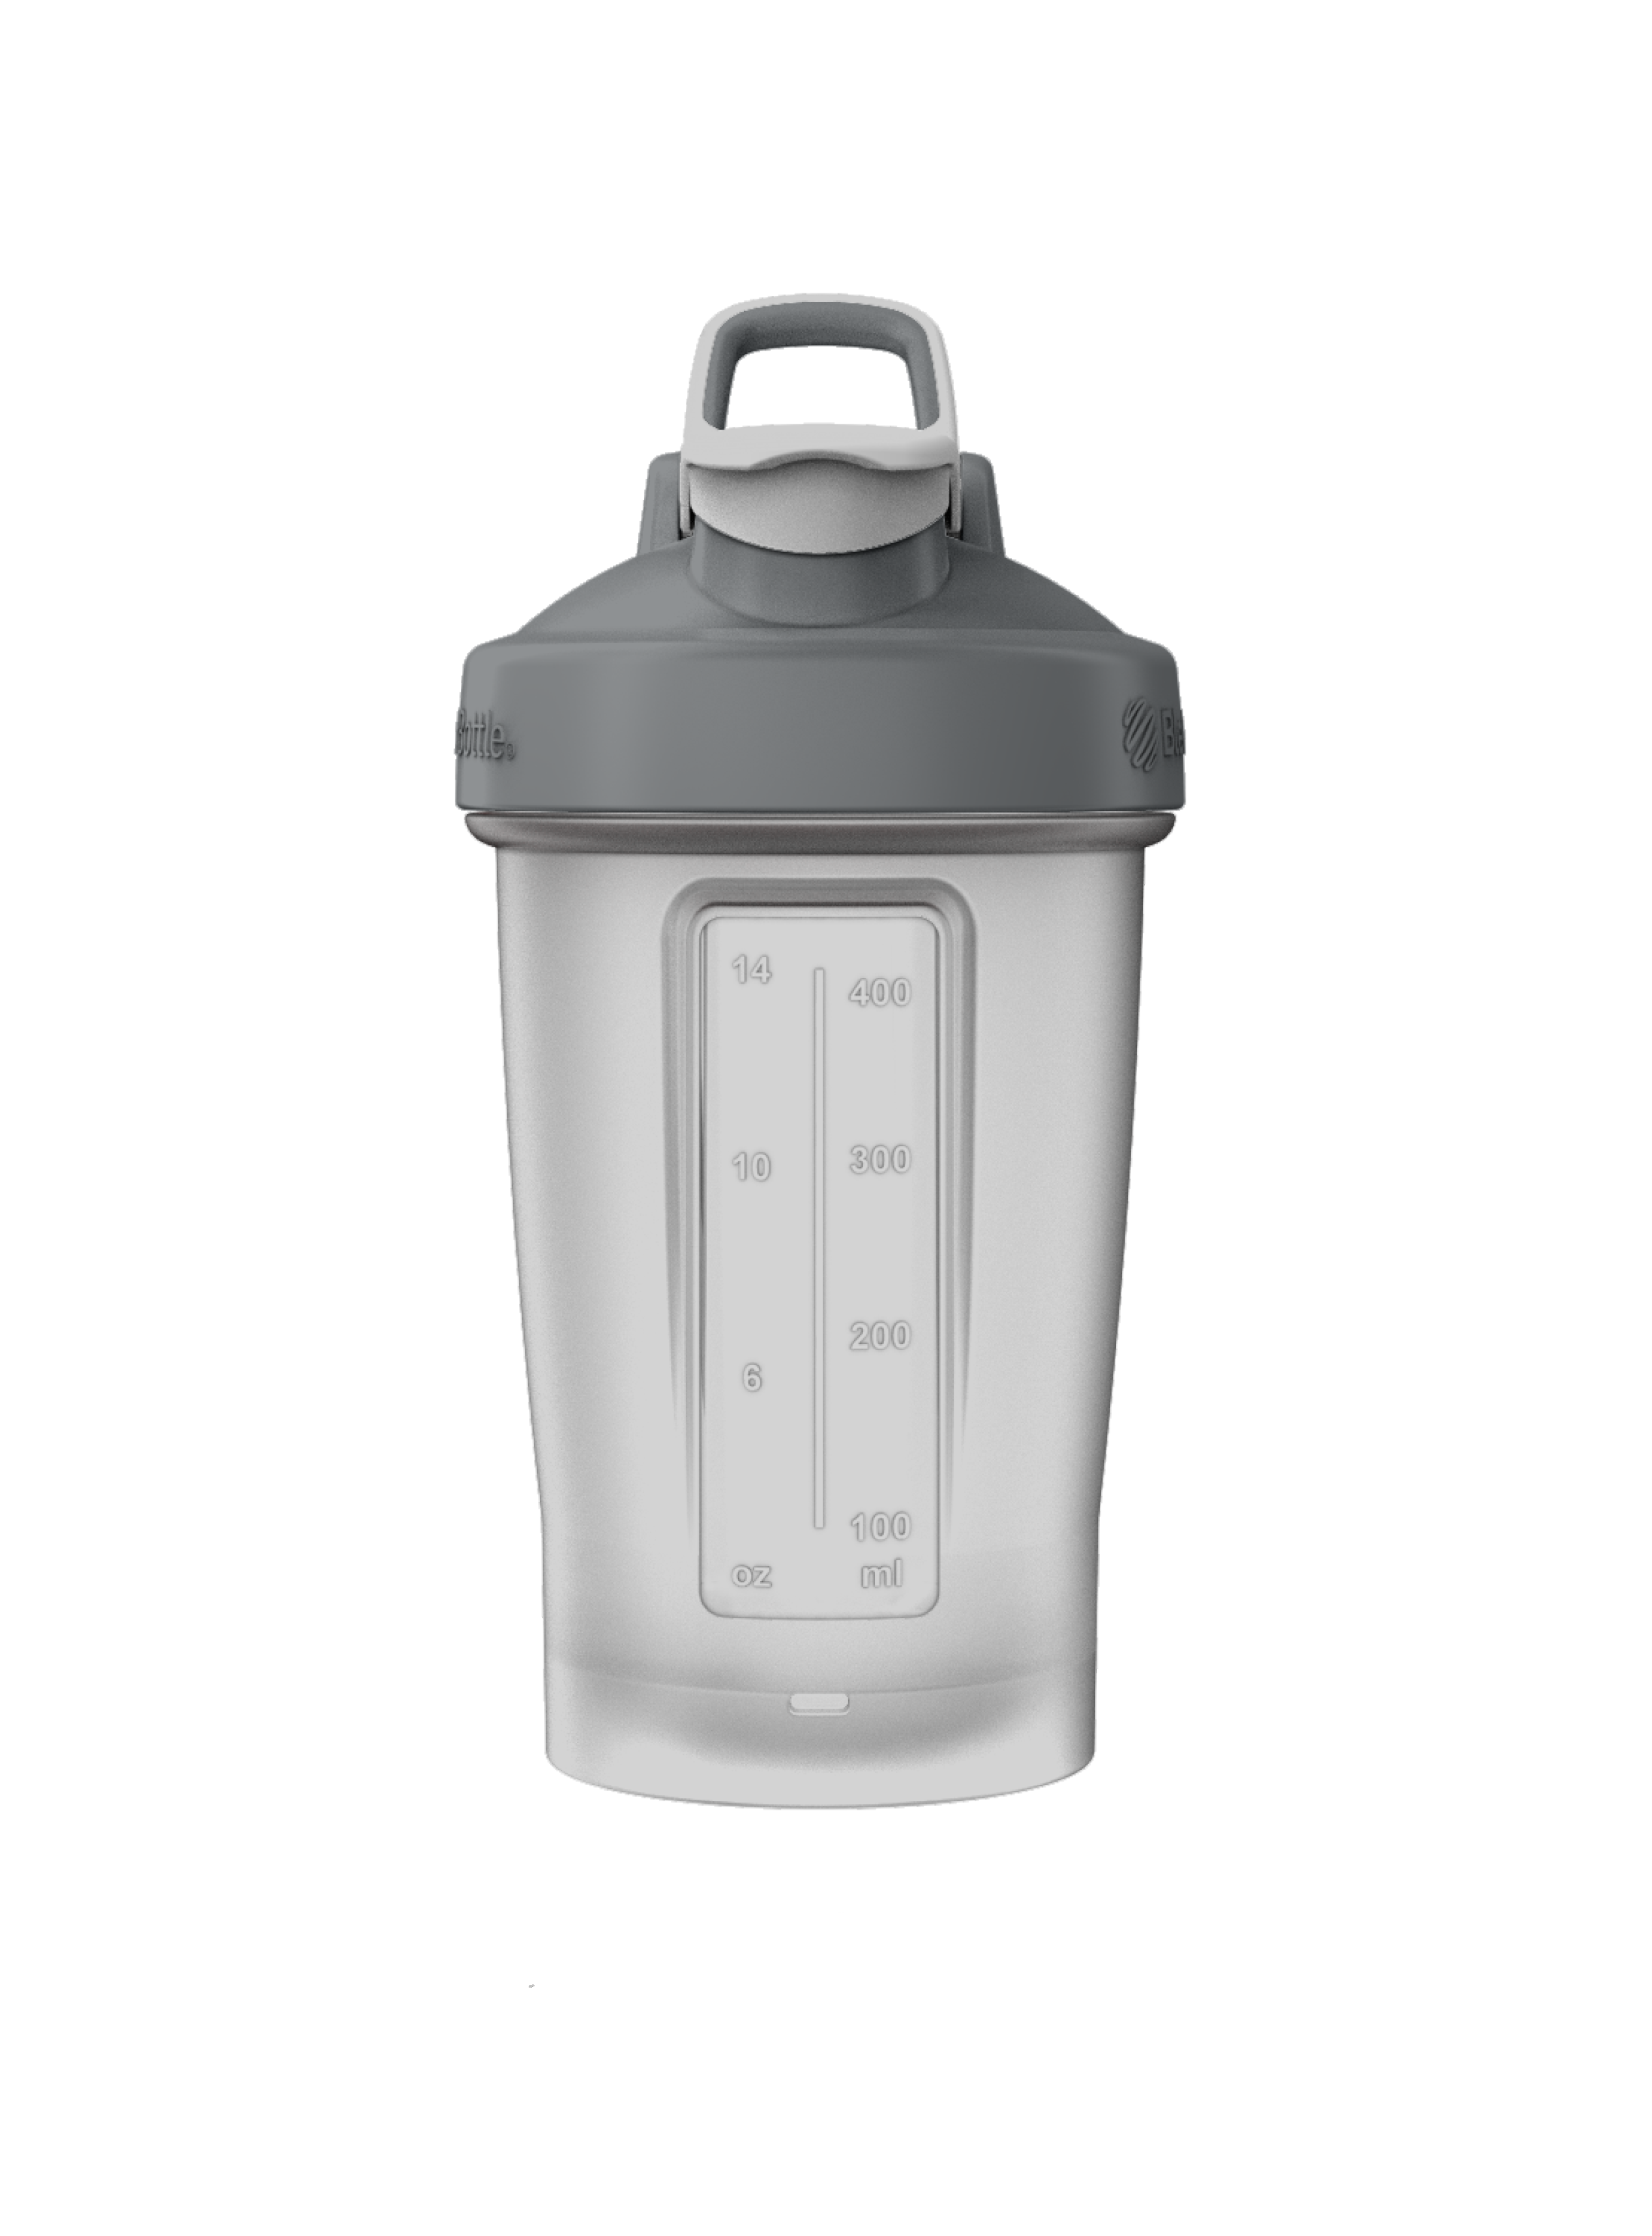 Plant Fuel 20oz Shaker Bottle